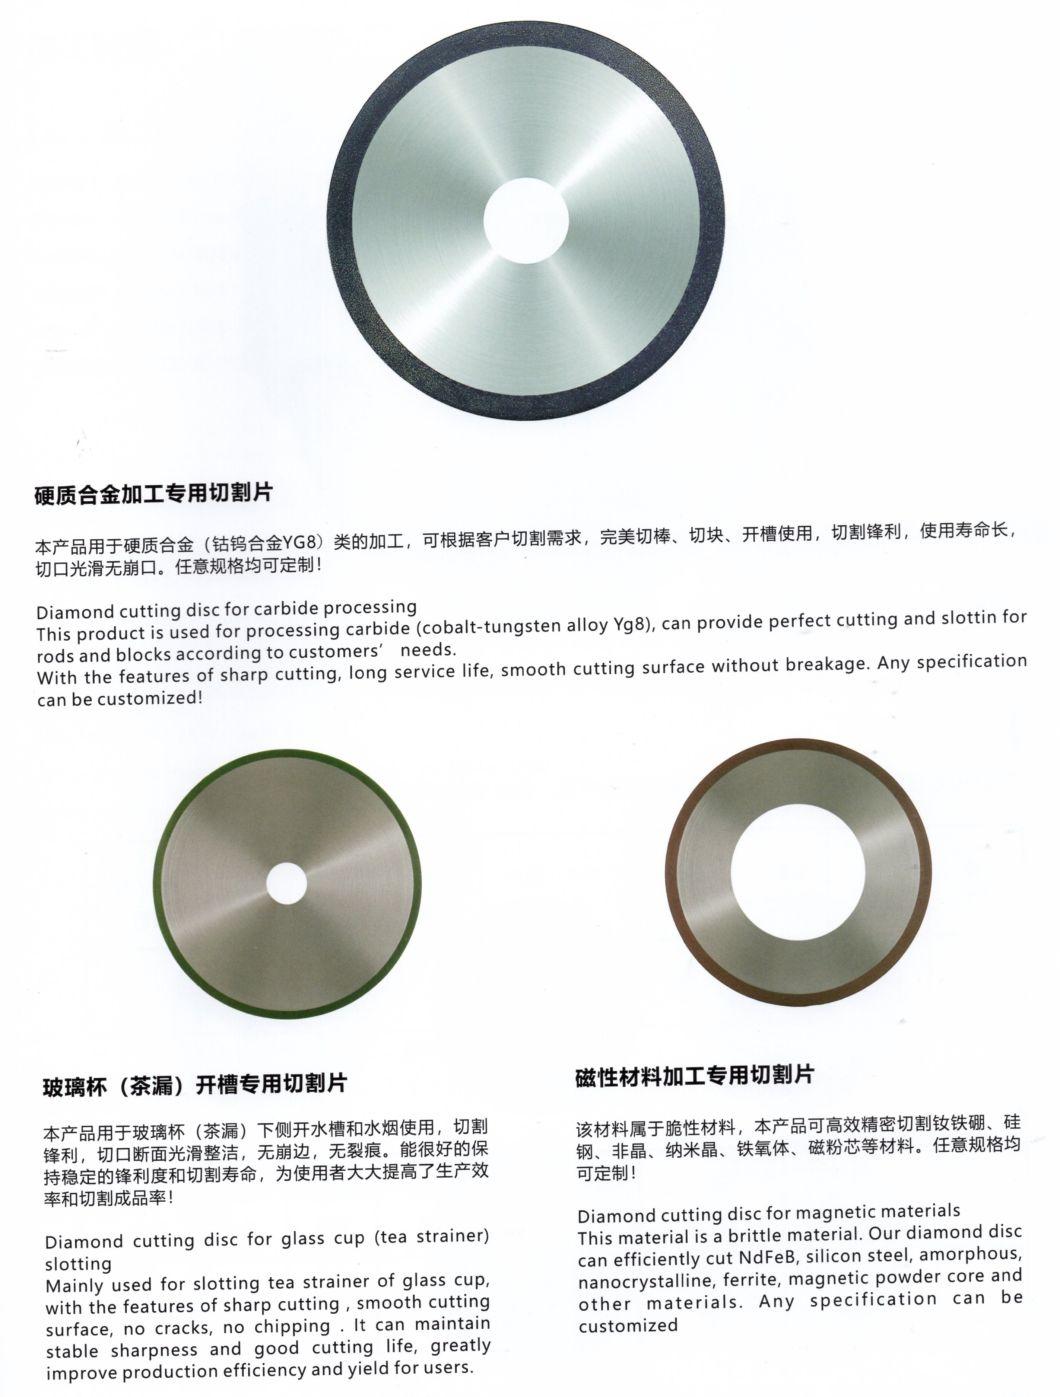 Resin Bonded Ultrathin Diamond Cutting Disc for Quartz and High Borosilicate Glass Tube Processing